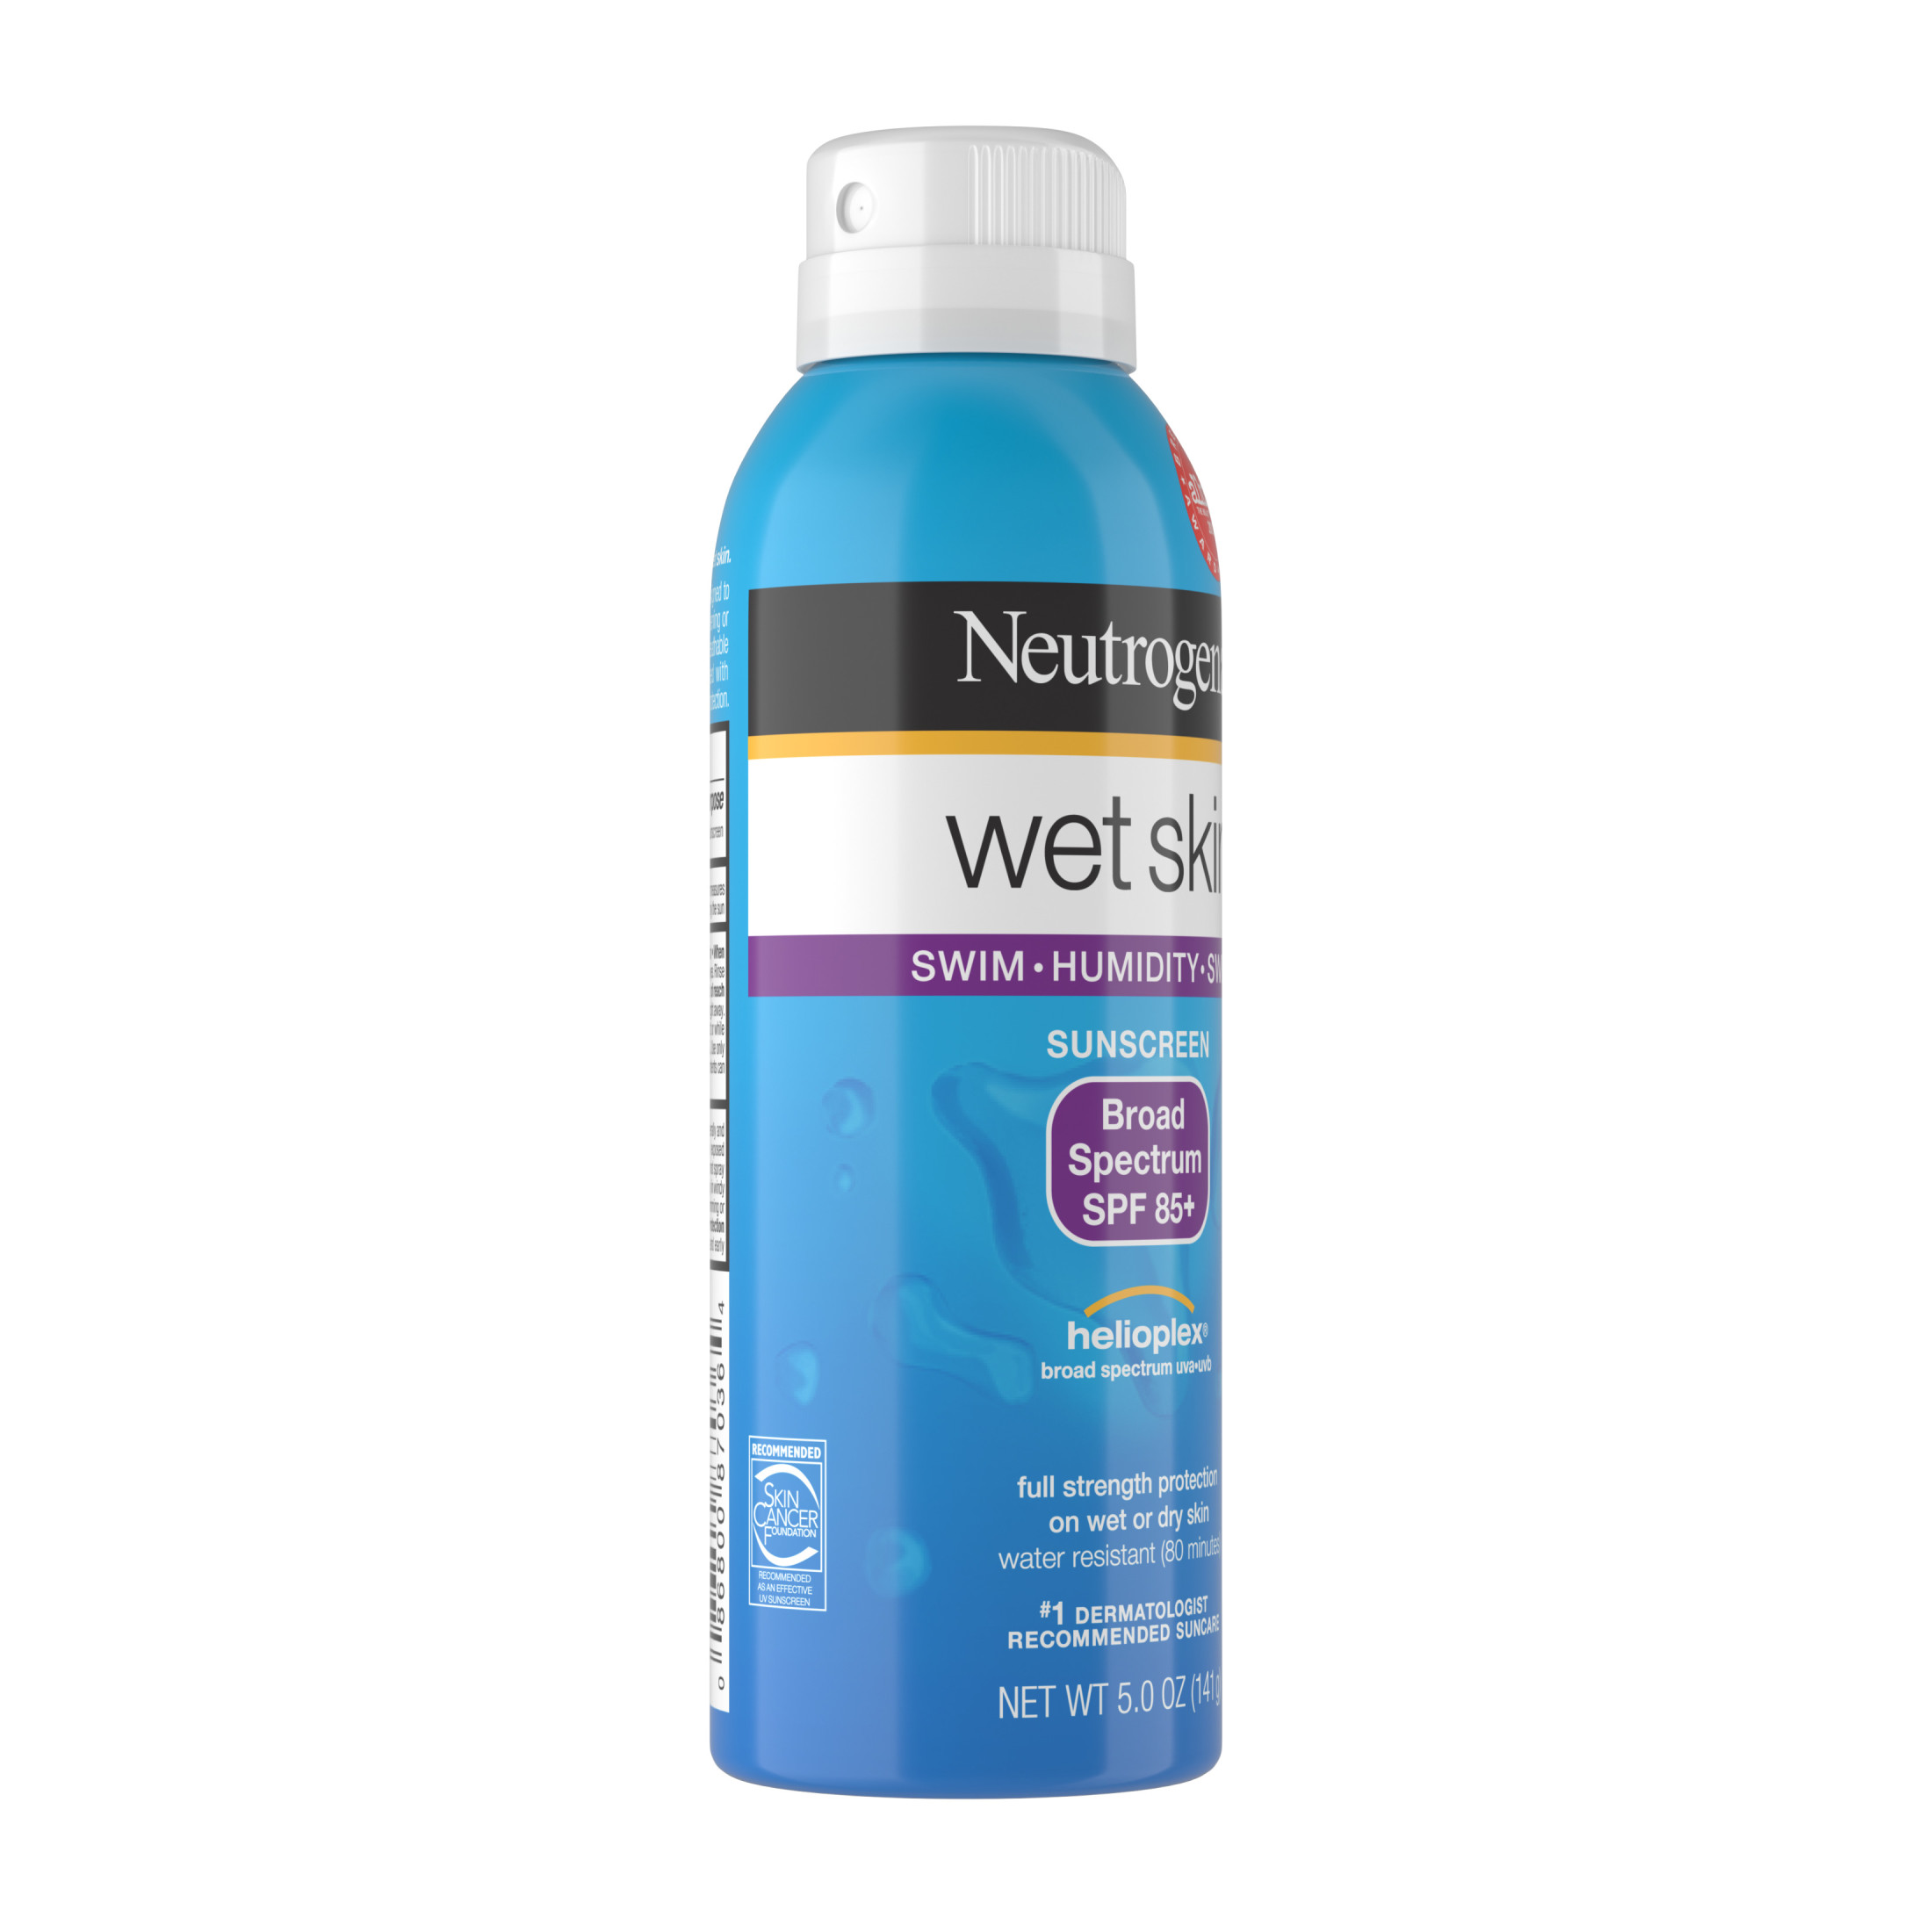 Neutrogena Wet Skin Sunscreen Spray Broad Spectrum SPF 85+, 5 oz - image 3 of 6